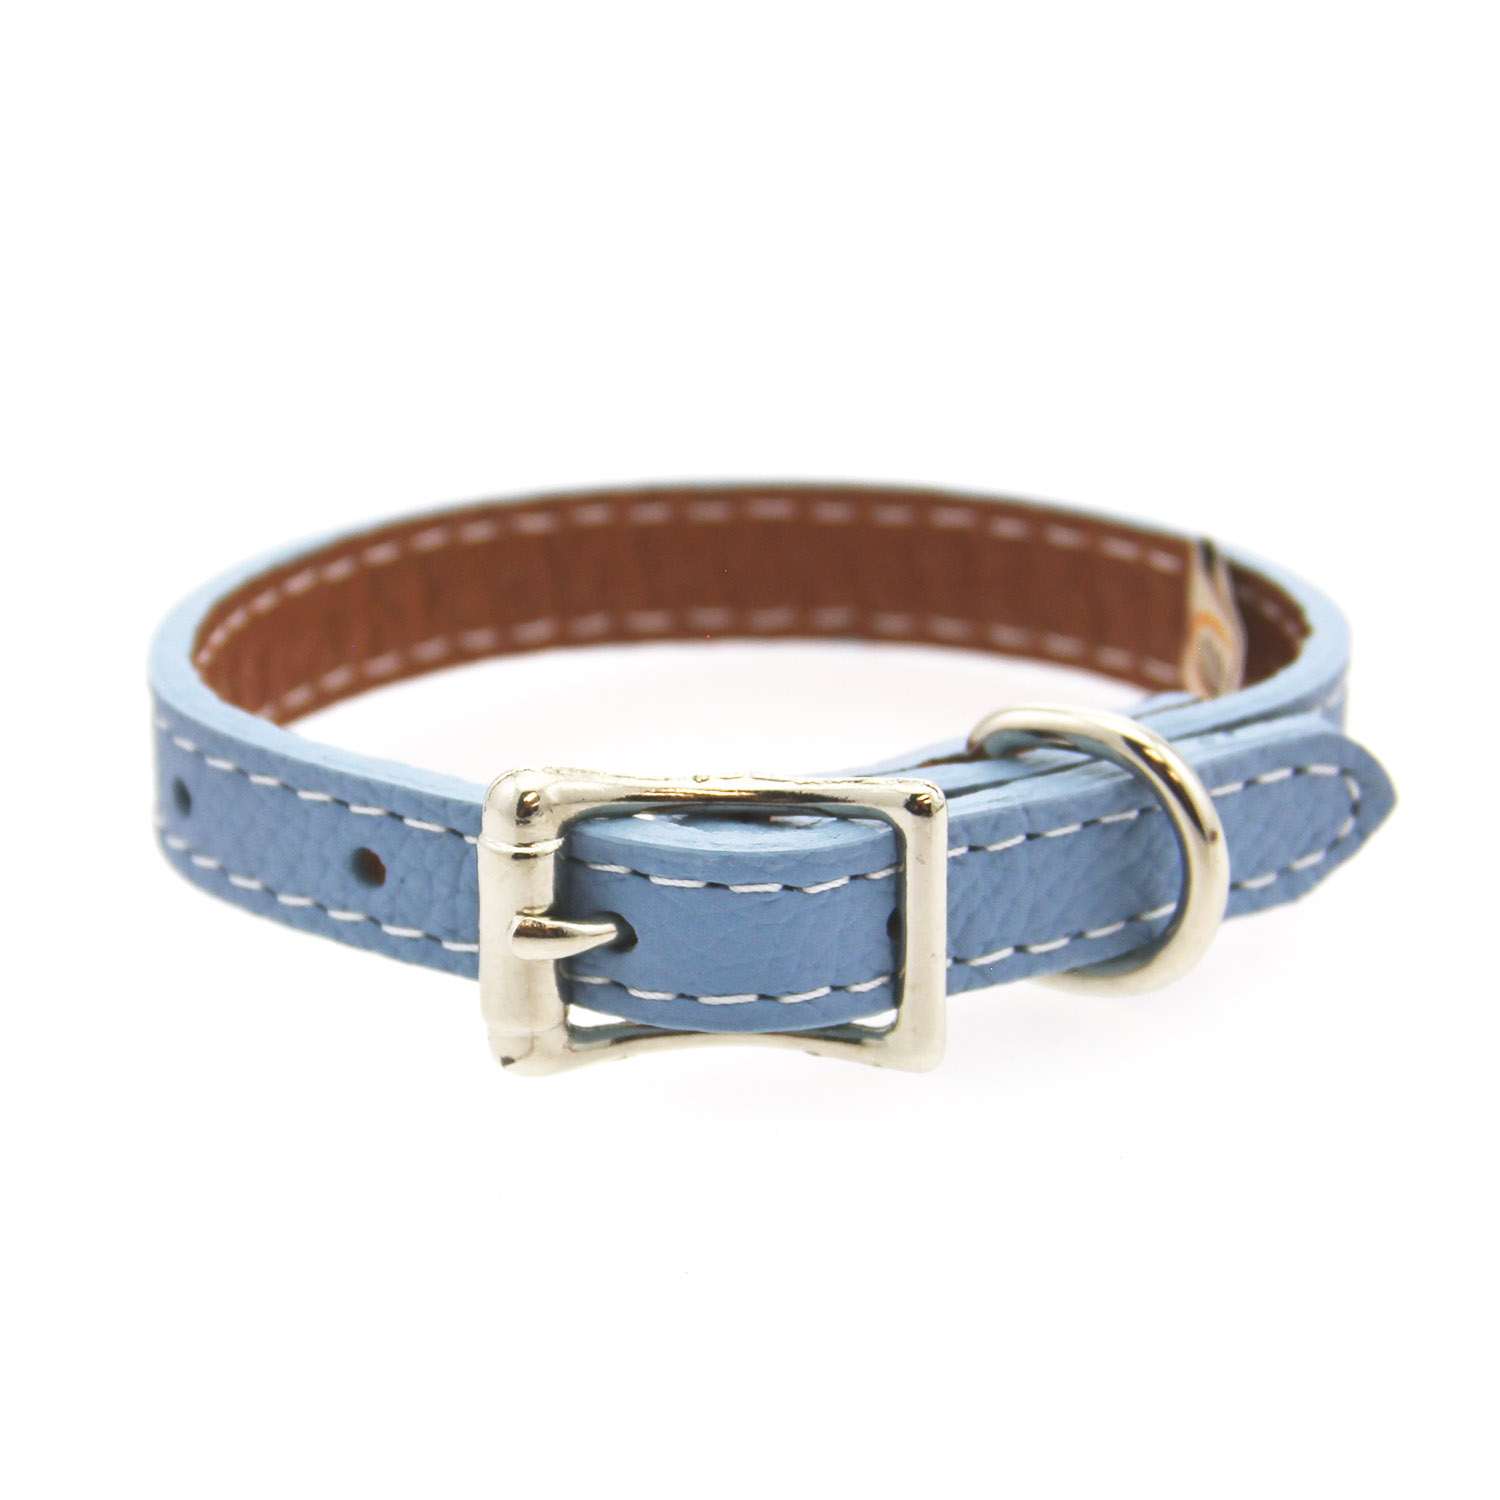 Tuscan Leather Dog Collar by Auburn Leather - Light Blue | BaxterBoo